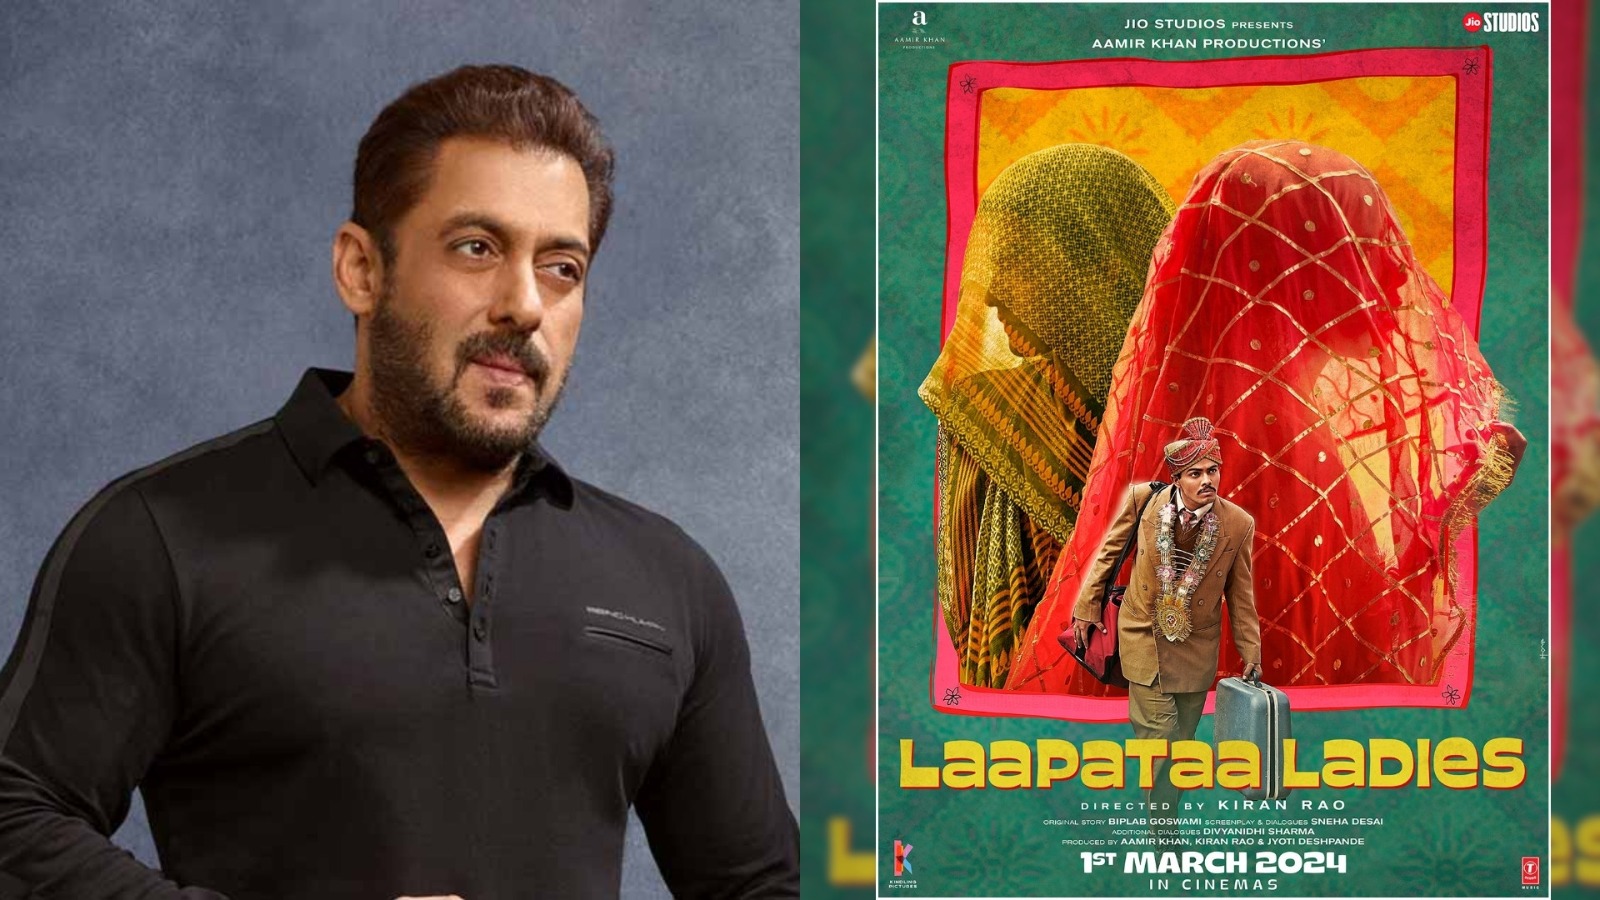 Salman Khan Praises Kiran Rao’s ‘Lapataa Ladies’, Gets Trolled